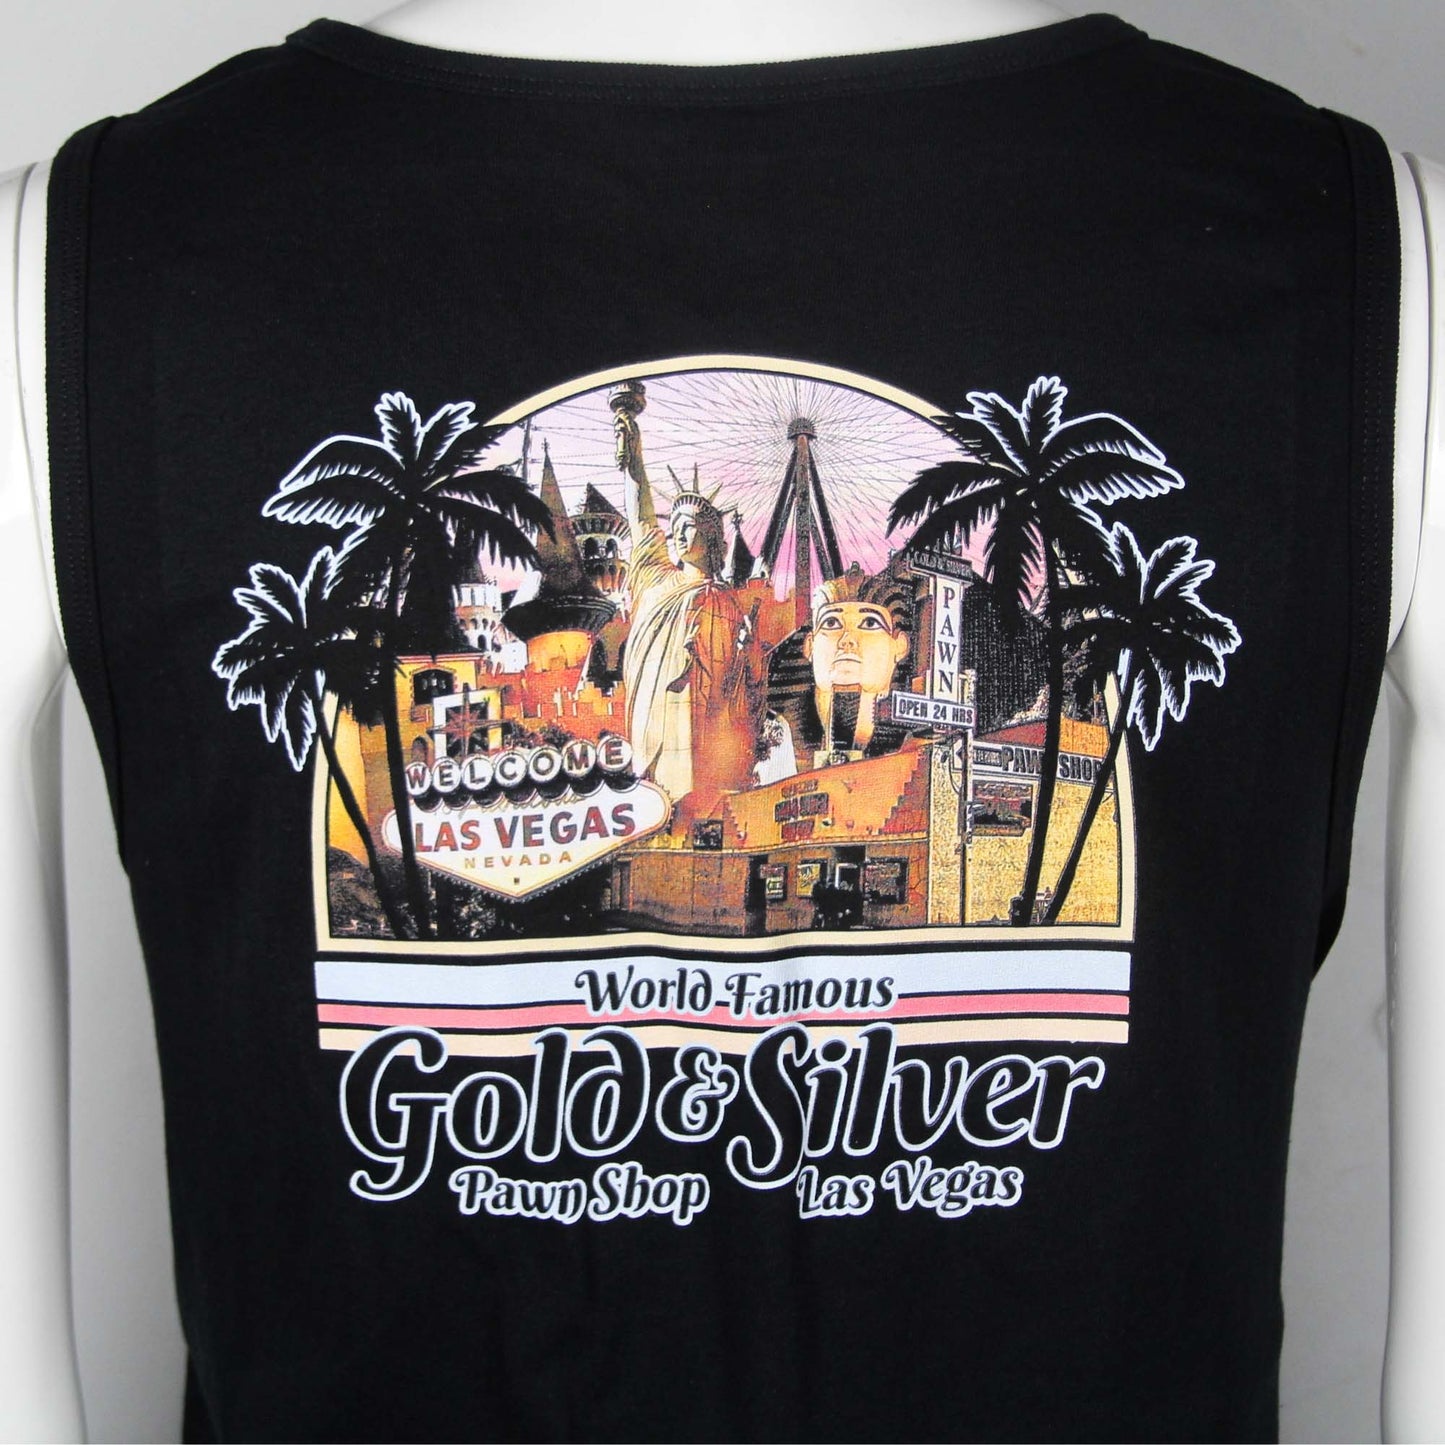 Gold & Silver Pawn Shop Black Palm Tree Tank Top Graphic